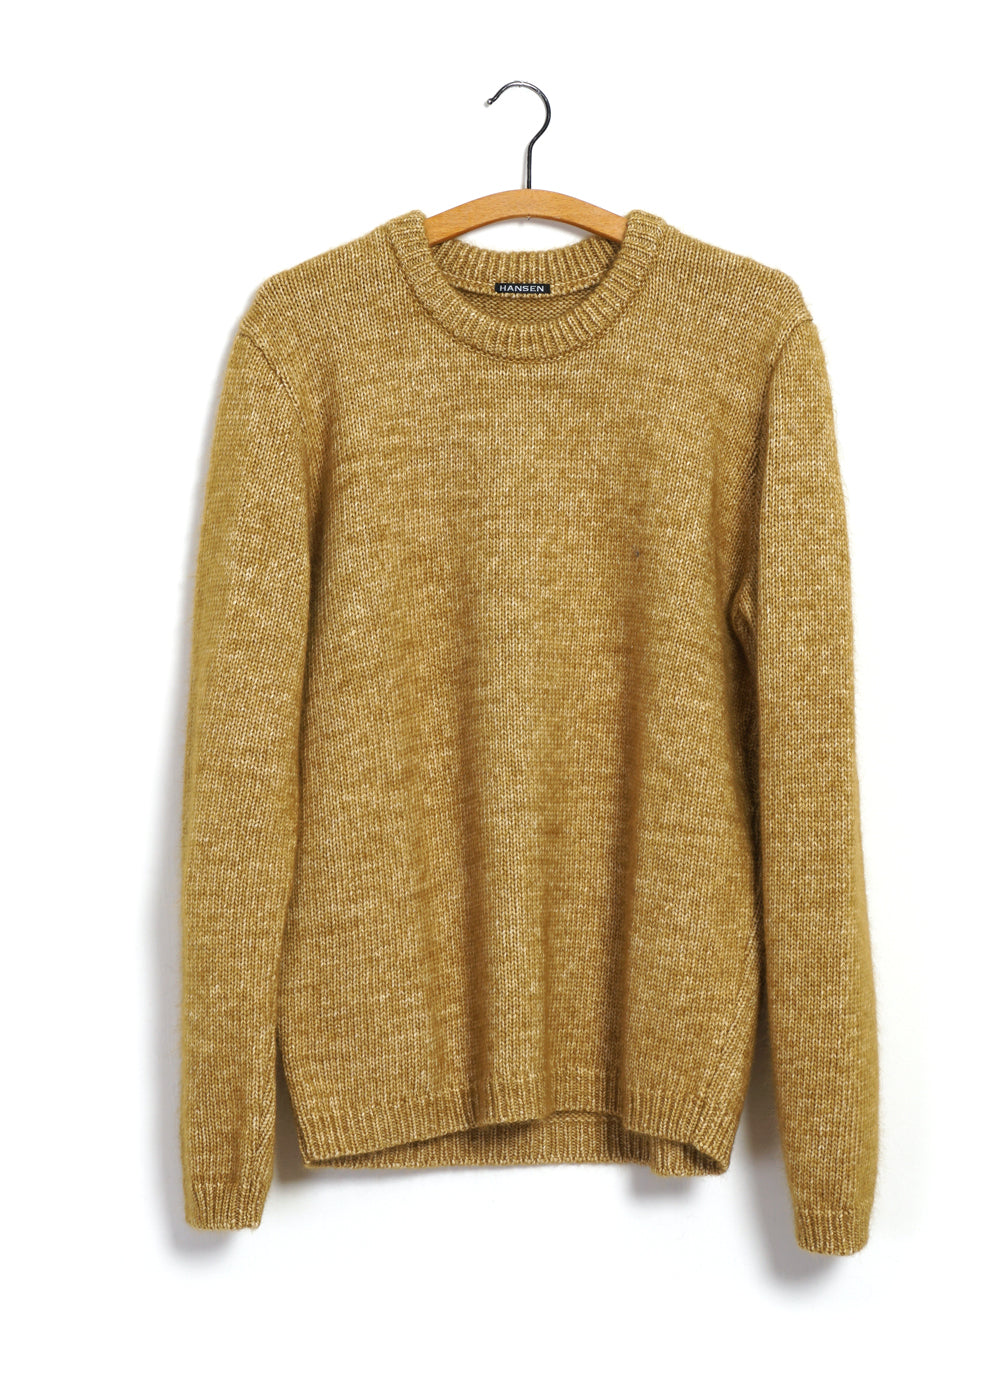 ESKE | Crew Neck Sweater | Gold | HANSEN Garments